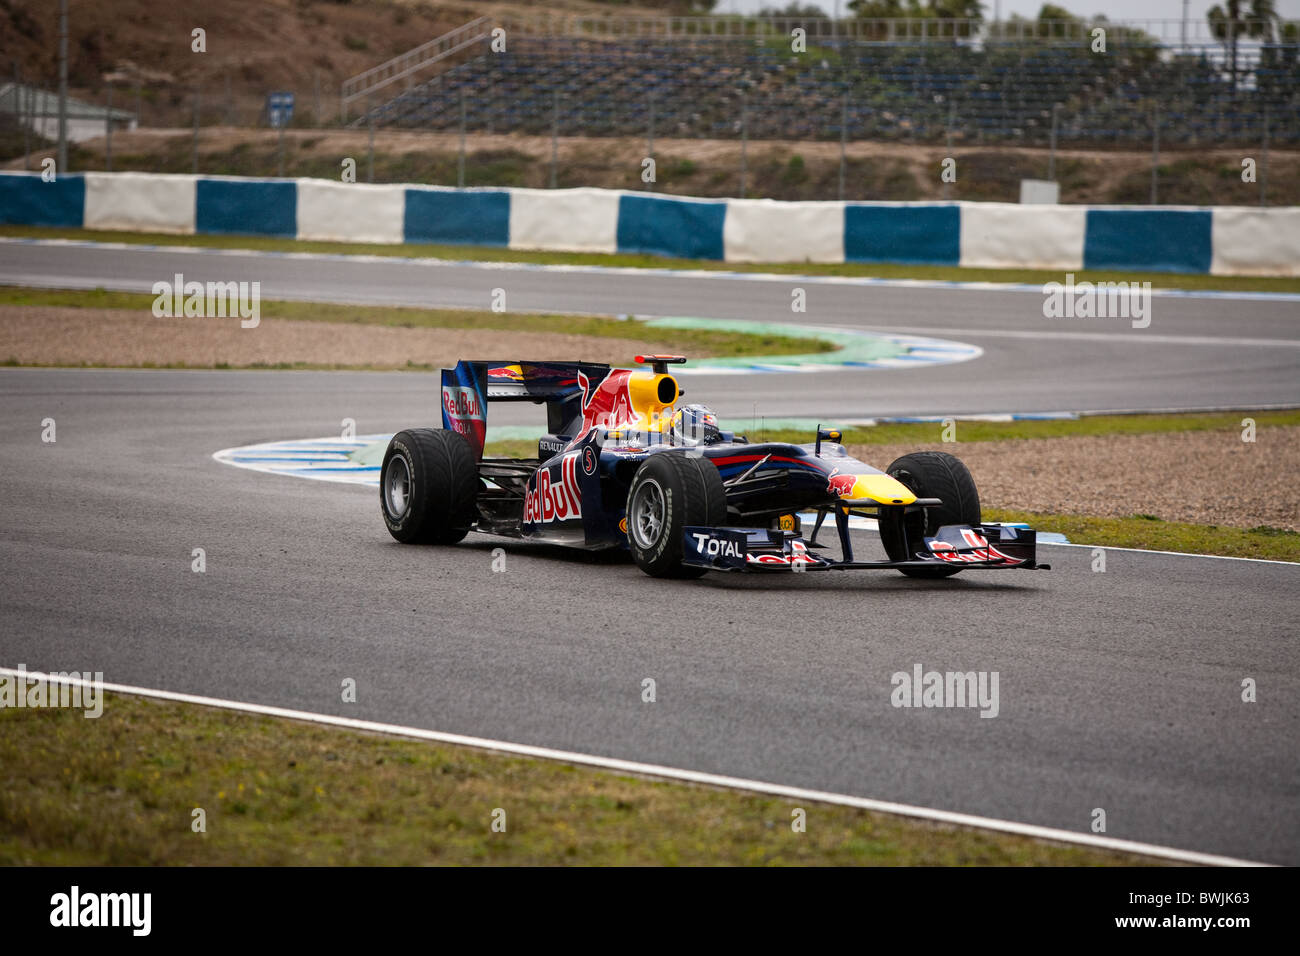 Sebastian Vettel in der 2010-Jerez-Praxis in seinem Red Bull RENAULT, Formel-1-Rennwagen, verlassen die Schikane. Stockfoto